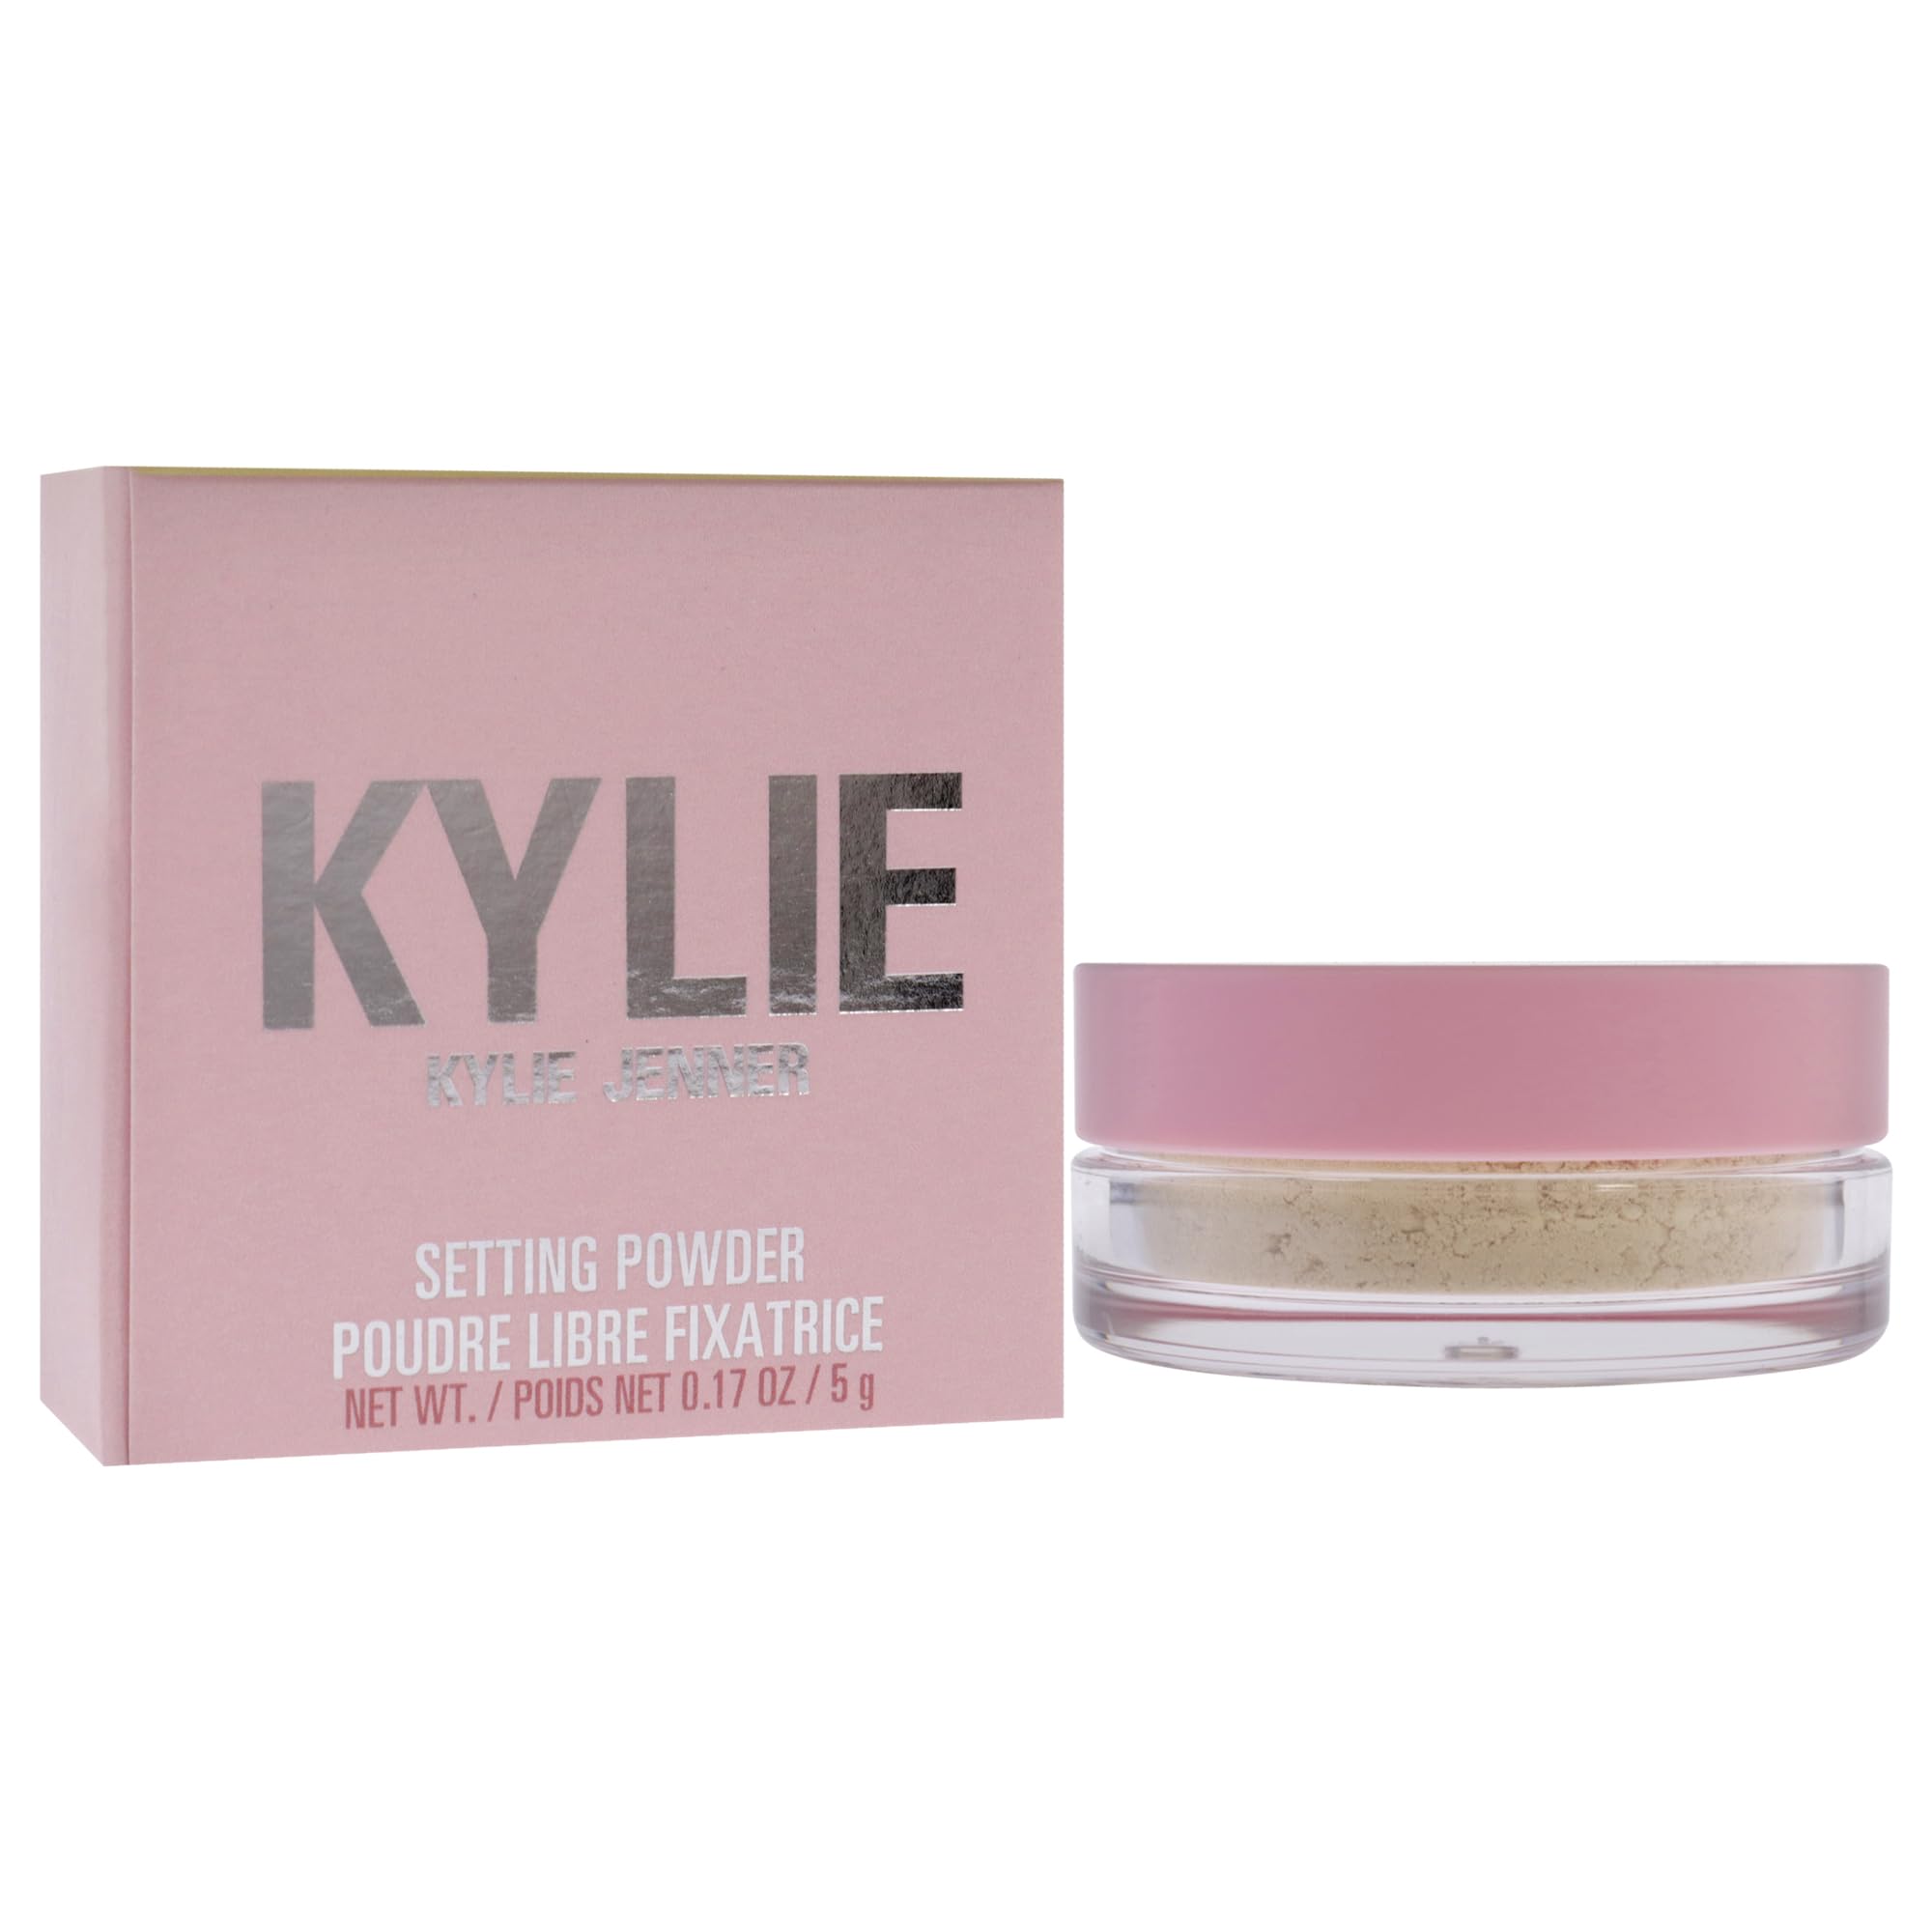 Setting Powder - 100 Translucent by Kylie Cosmetics for Women - 0.3 oz Powder